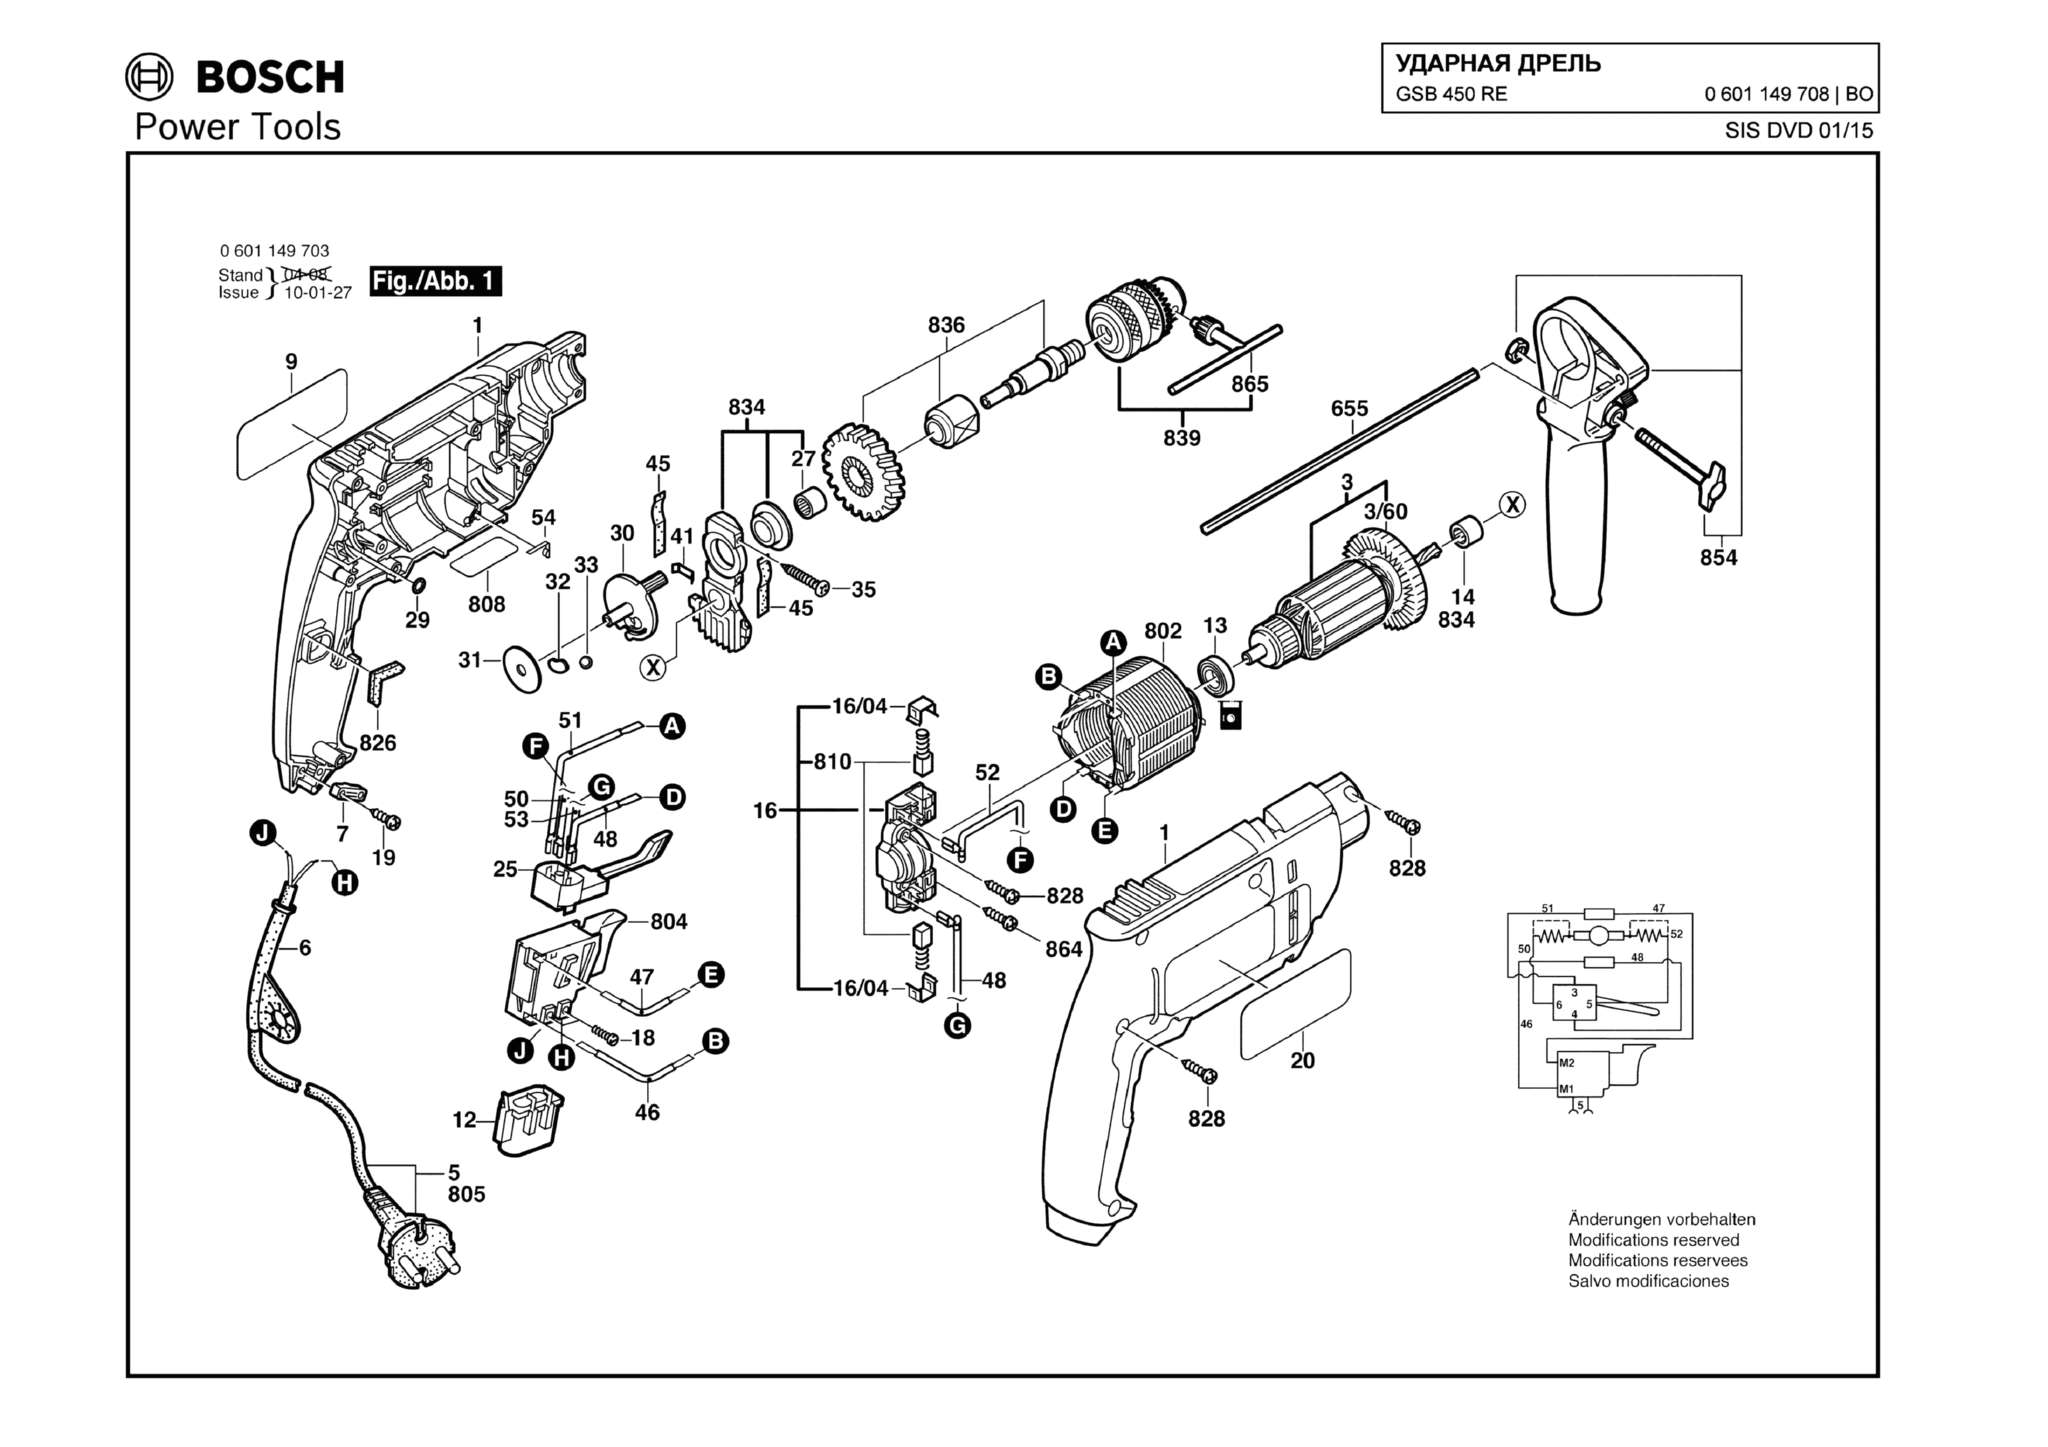 Запчасти, схема и деталировка Bosch GSB 450 RE (ТИП 0601149708)